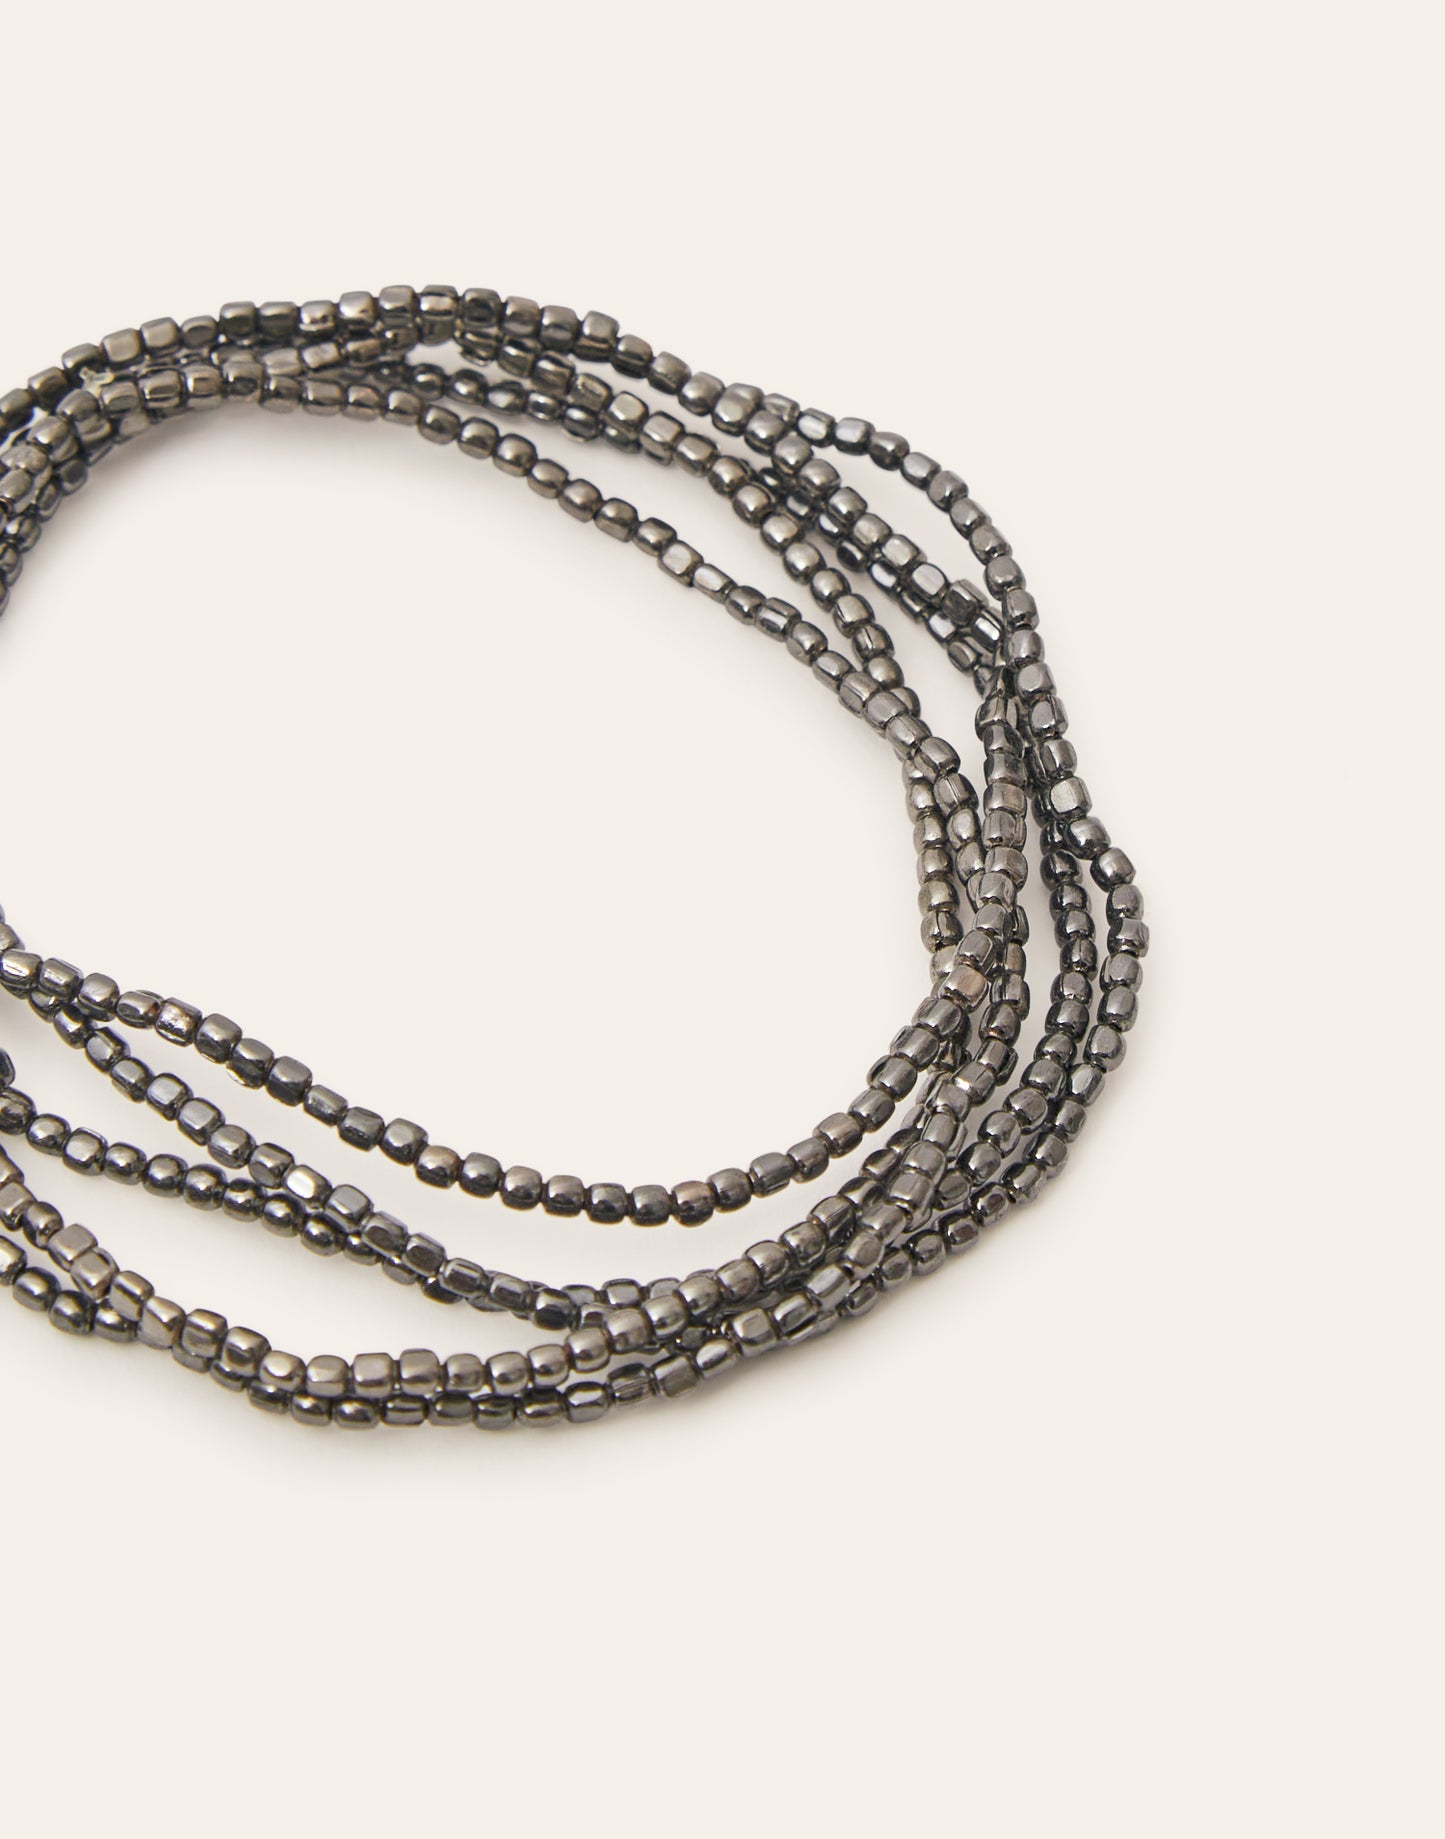 Pack 5 metallic beads bracelets